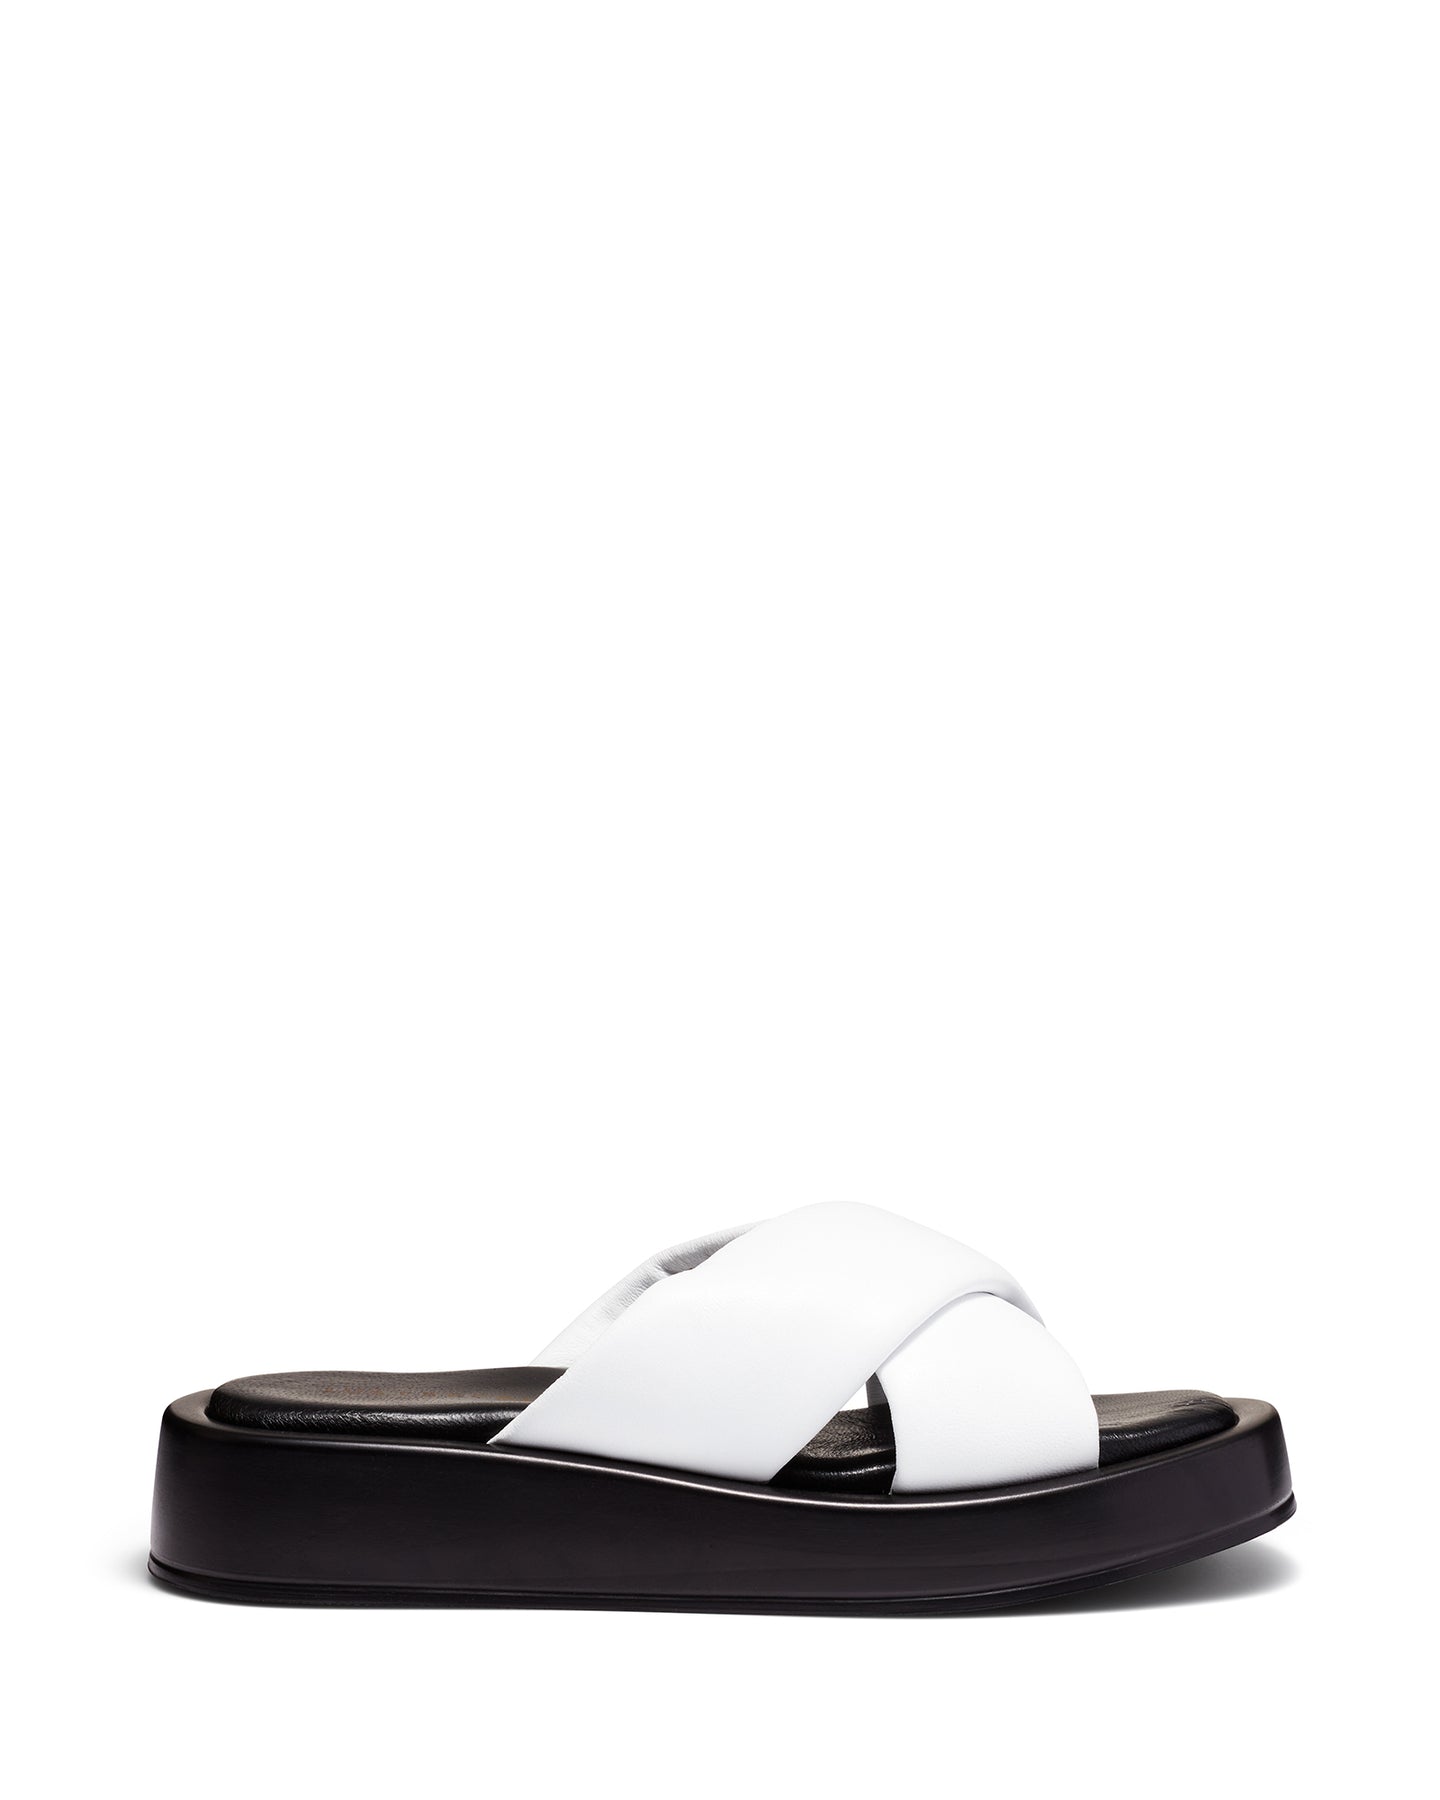 Just Because Shoes Santina White | Leather Flatform | Slides | Sandals